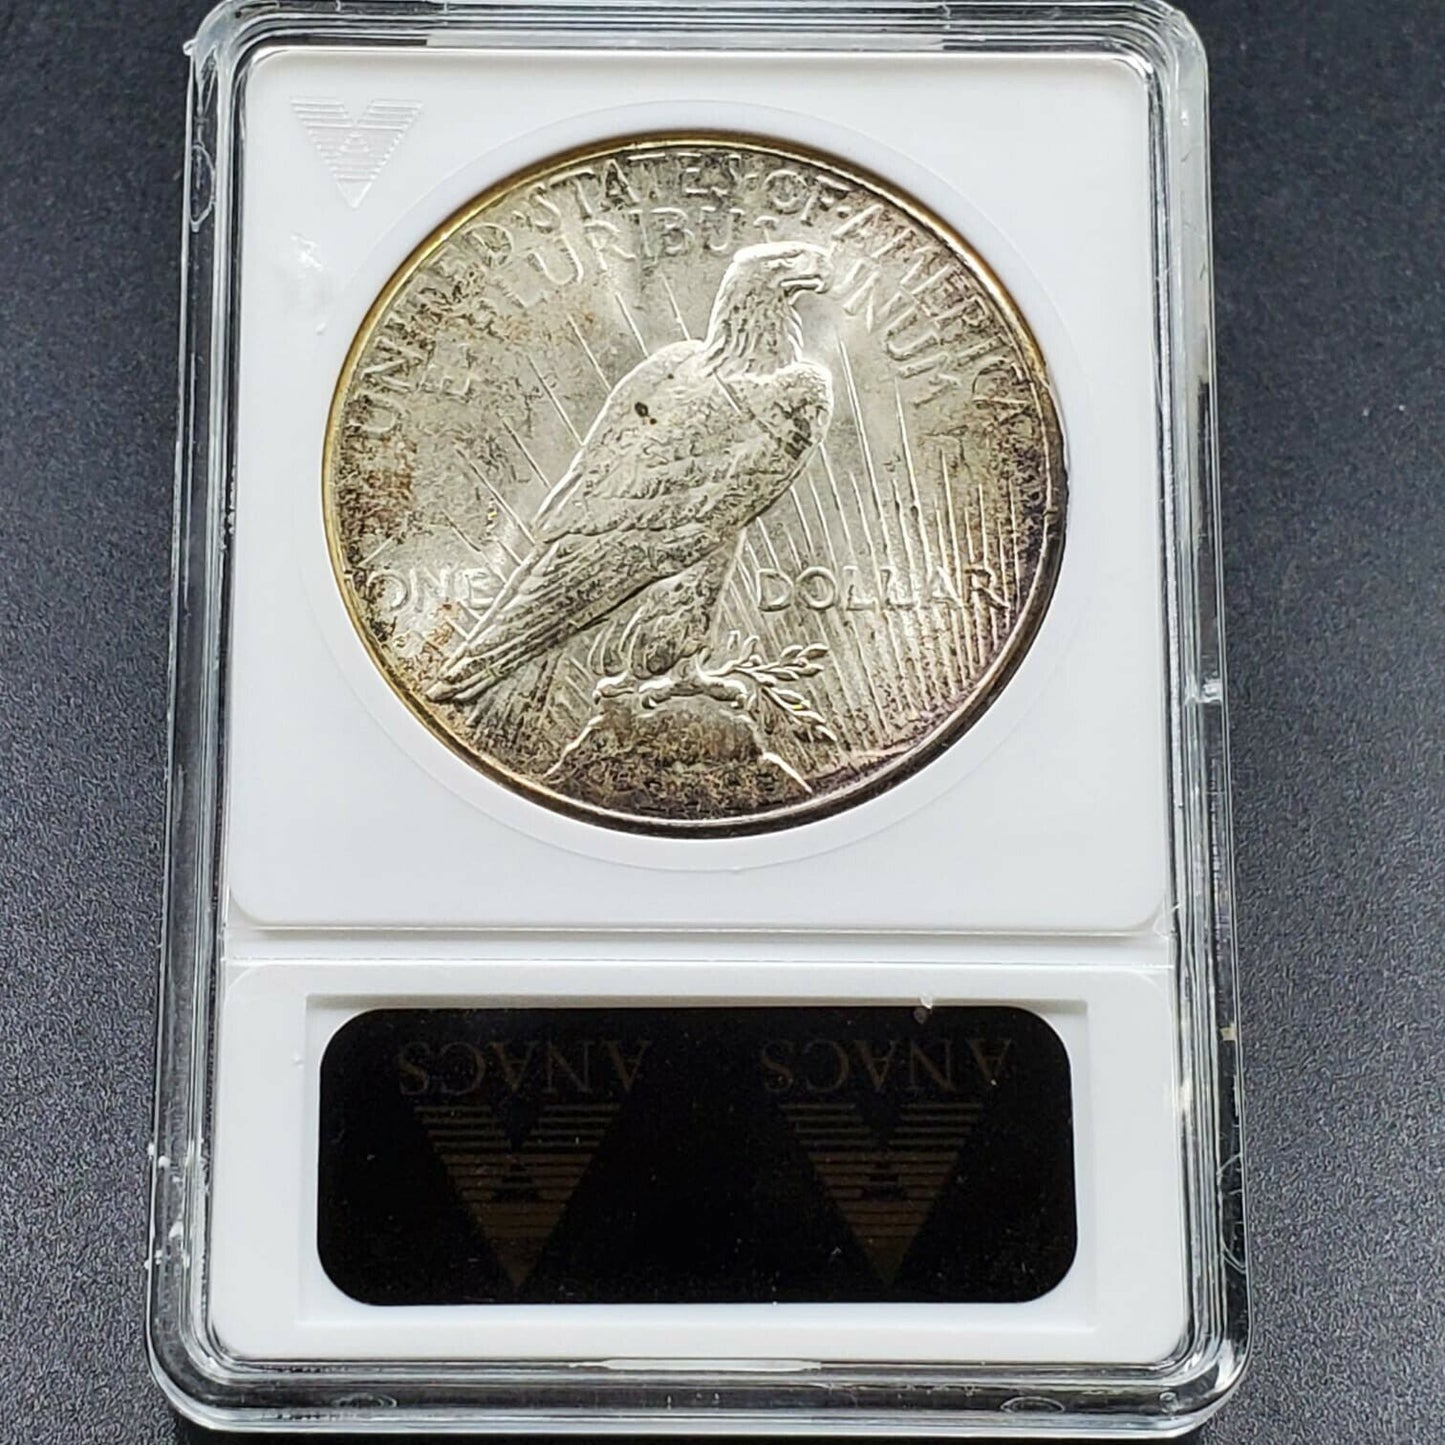 1926 S Peace Silver Dollar Variety Coin ANACS MS63 VAM-1 Vam 1